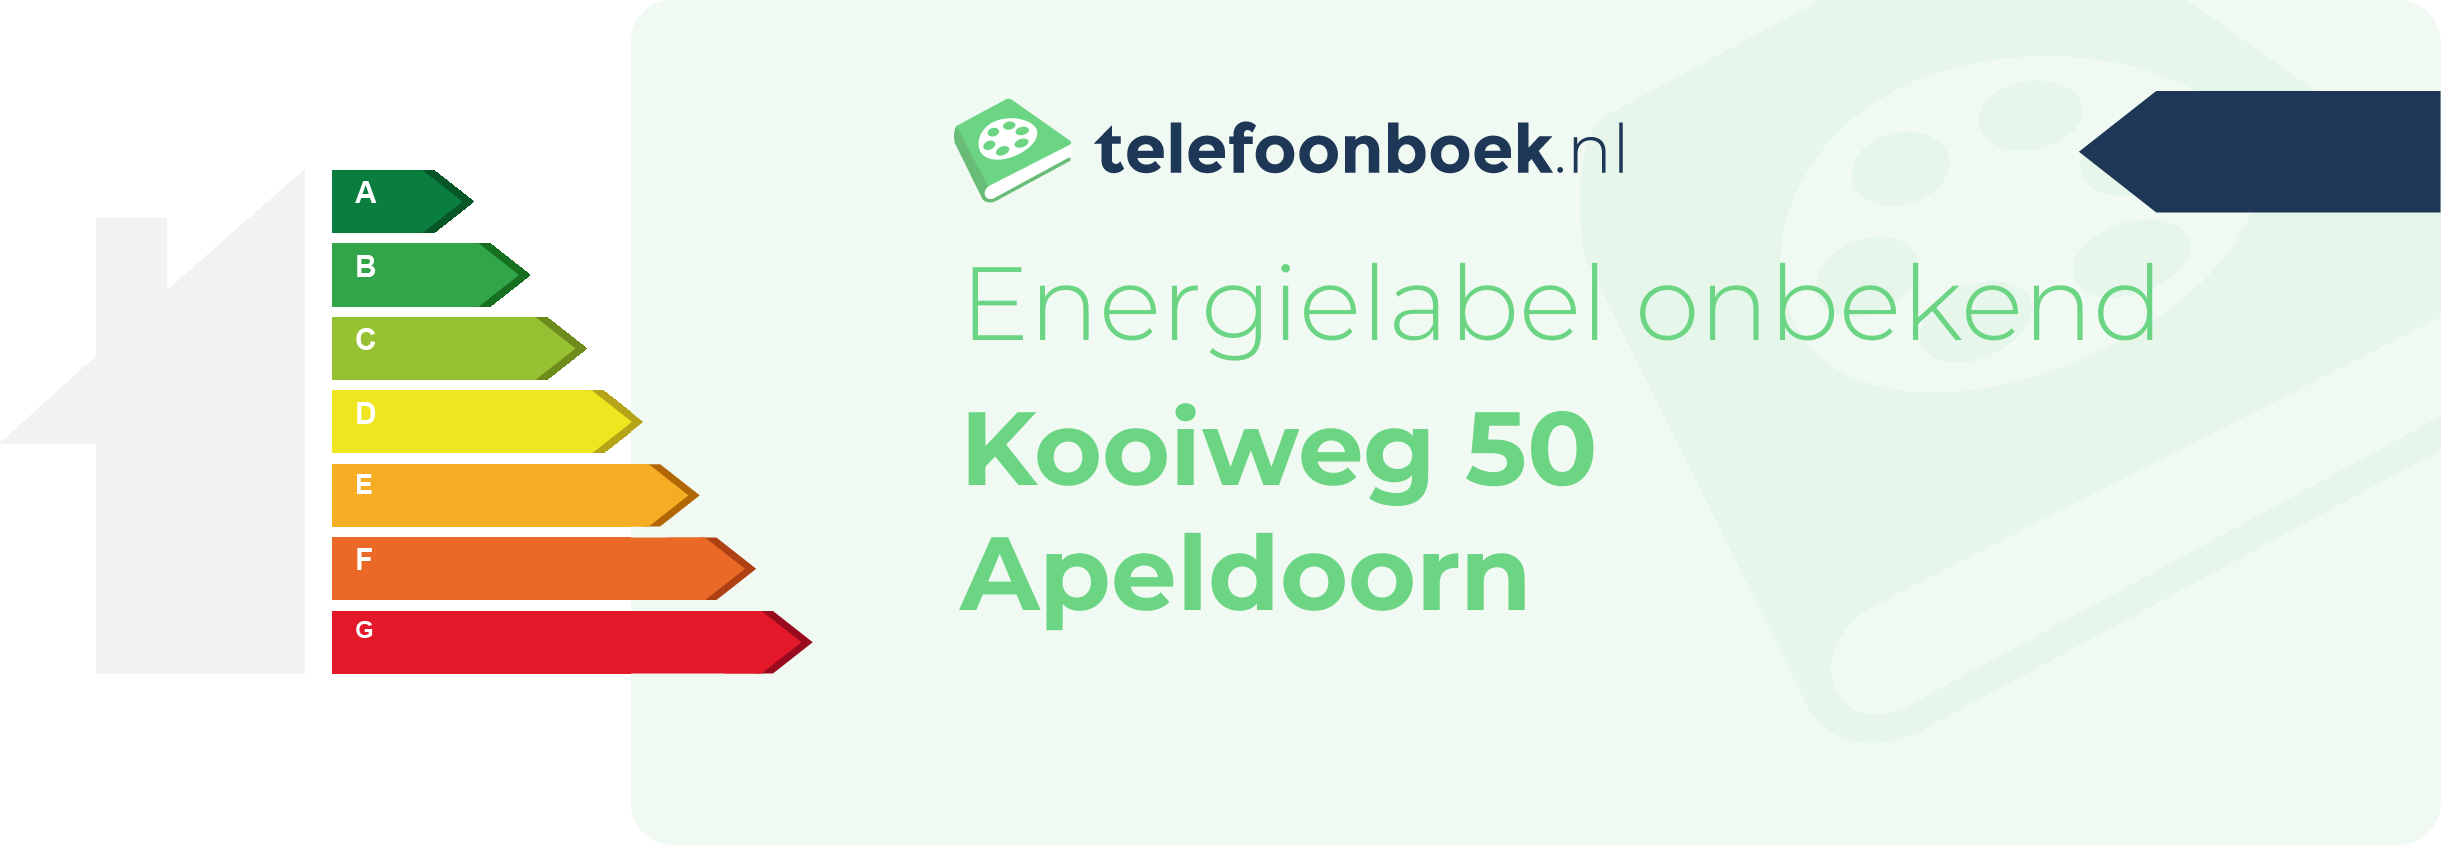 Energielabel Kooiweg 50 Apeldoorn